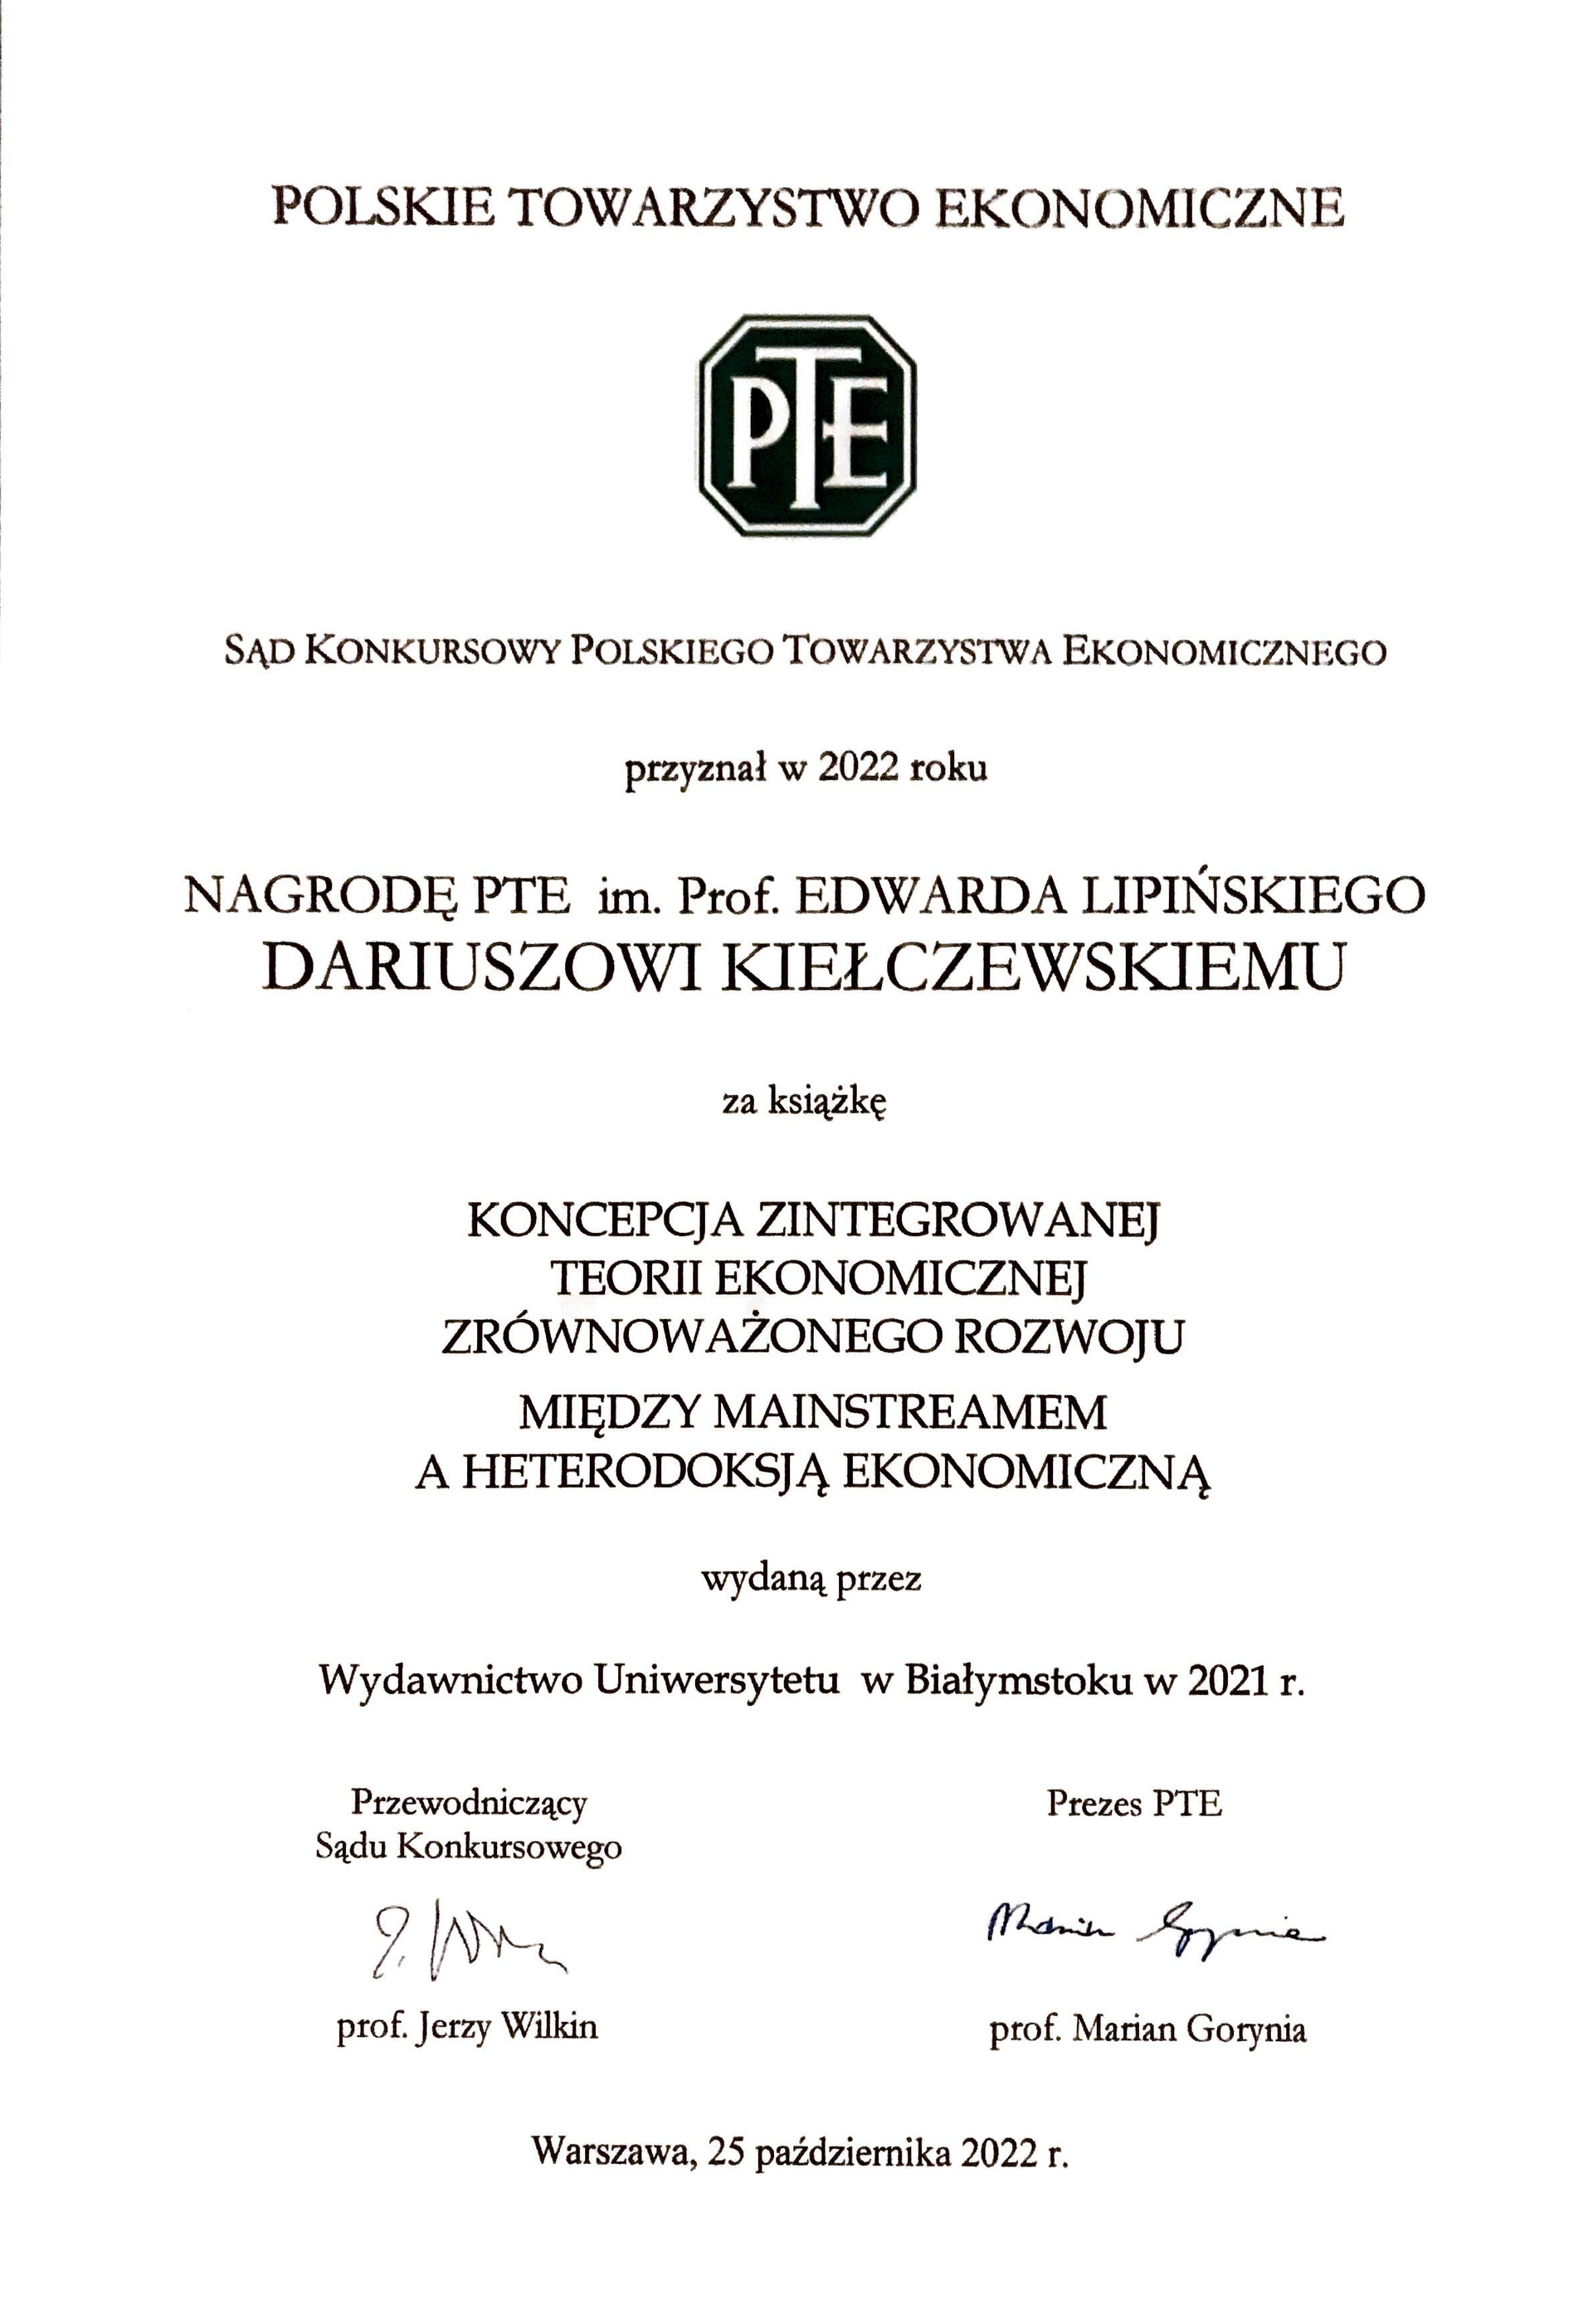 pte_nagroda_profesor_kielczewski.png